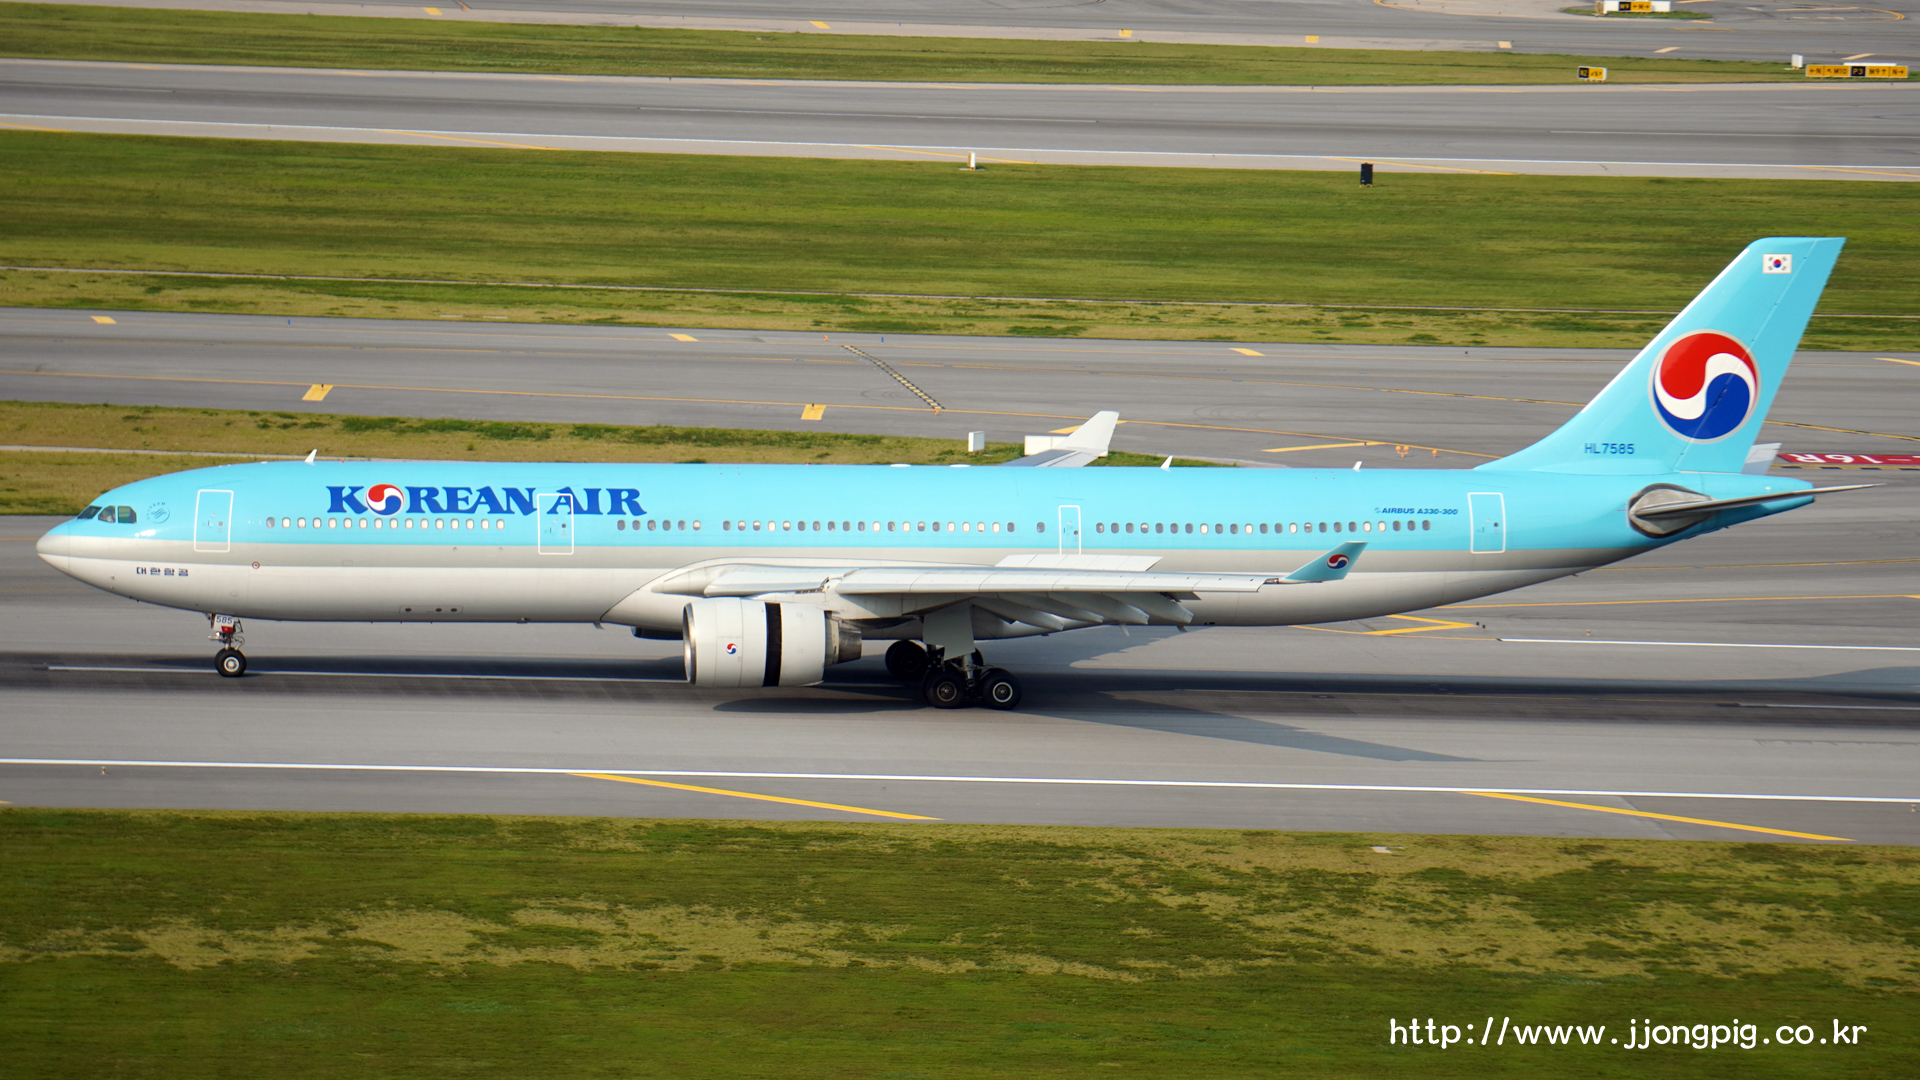 alt=&quot;Korean Air HL7585 Airbus A330-300